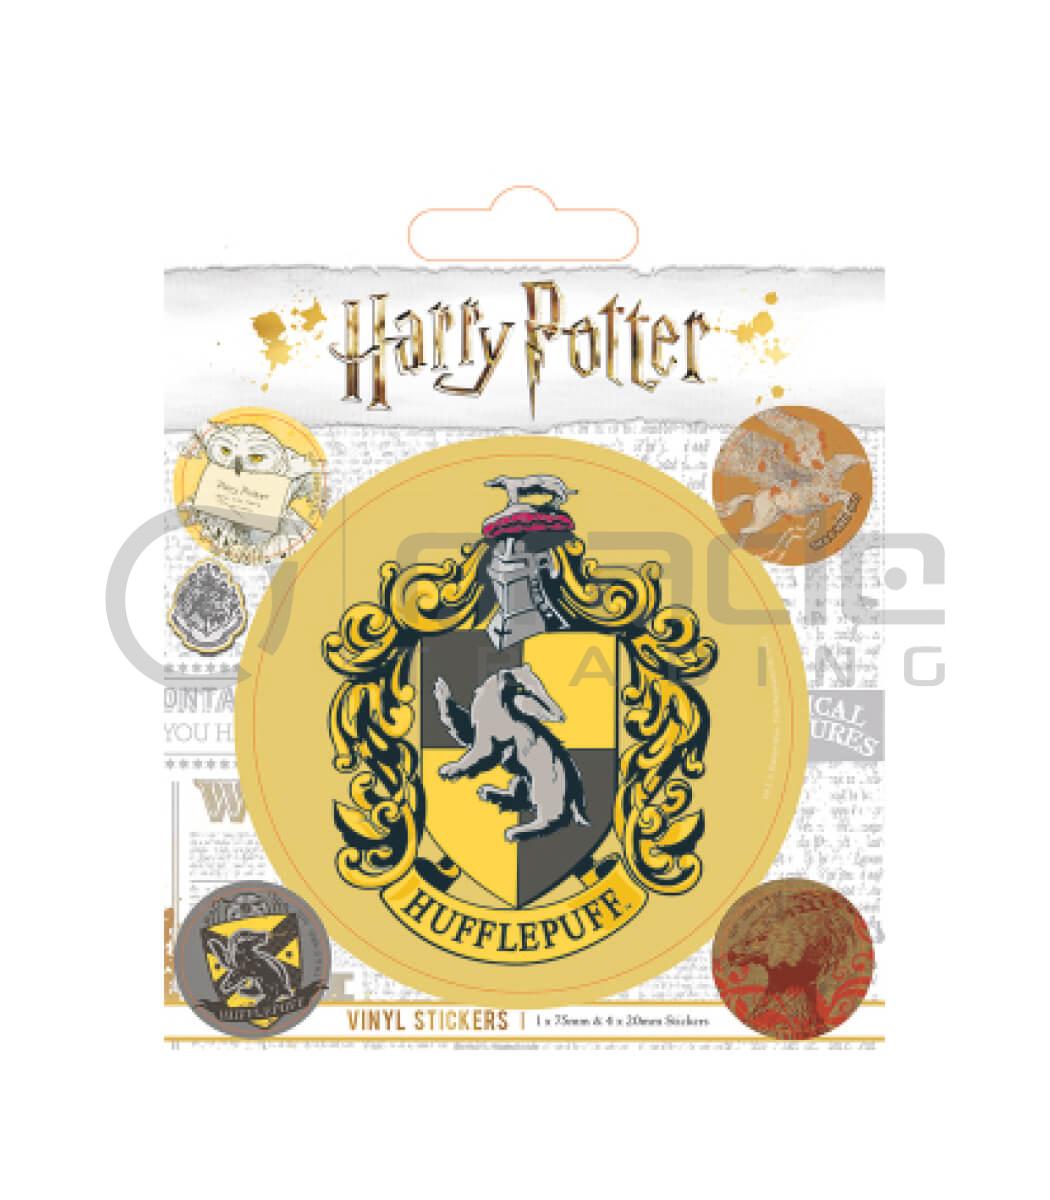 Harry Potter Hufflepuff Vinyl Sticker Pack – Oracle Trading Inc.